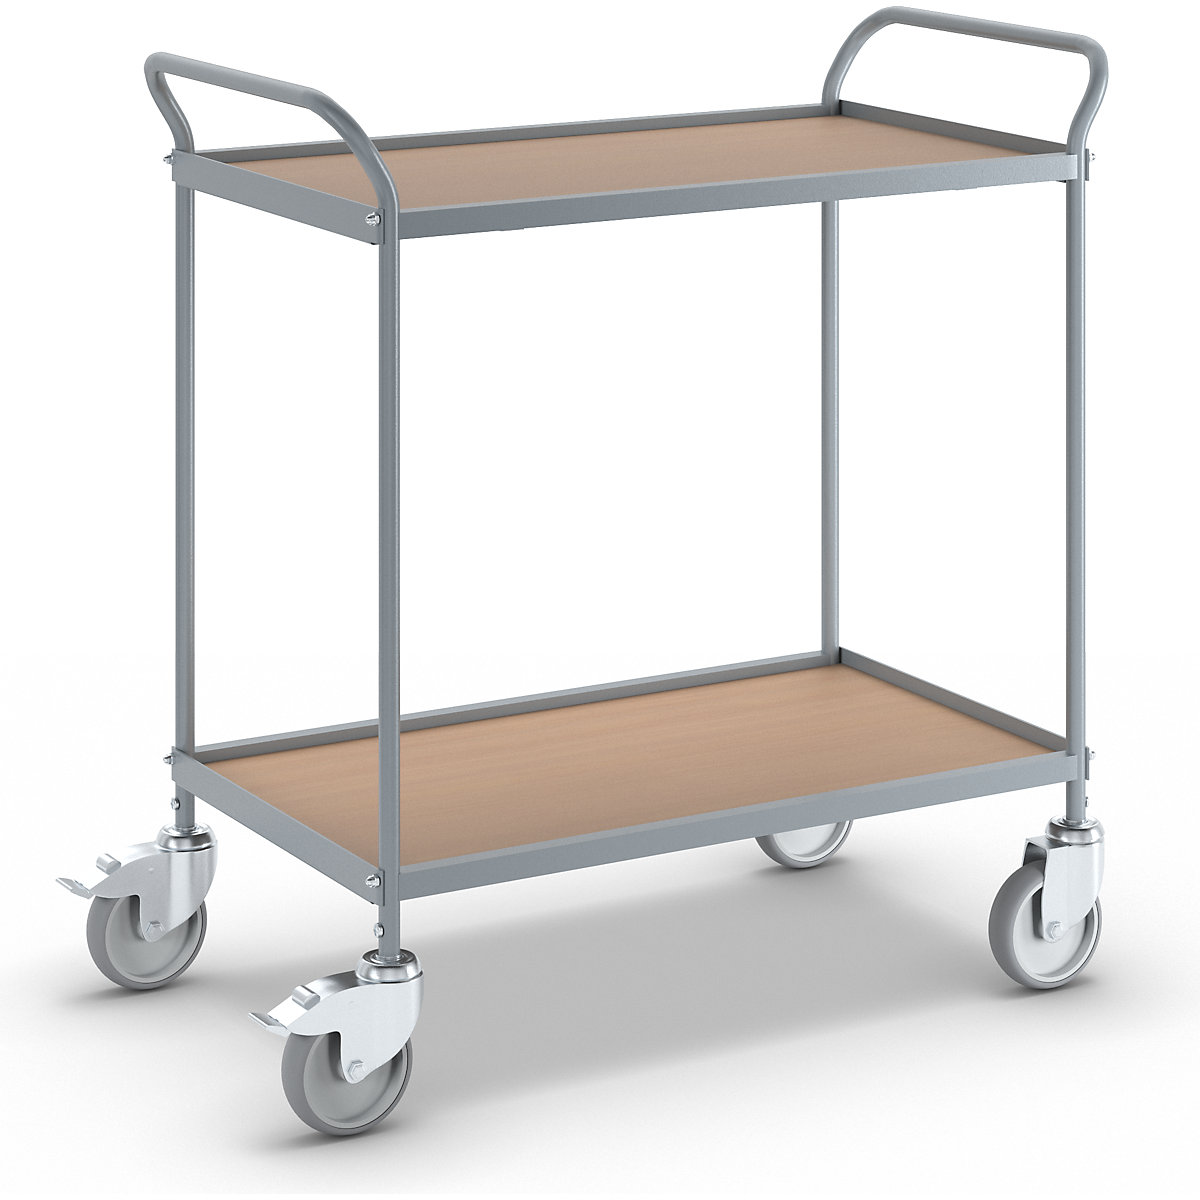 Serving trolley – eurokraft pro, shelf height 590 mm, 2 shelves, with 4 swivel castors, 2 with double stops, wheel Ø 125 mm-10